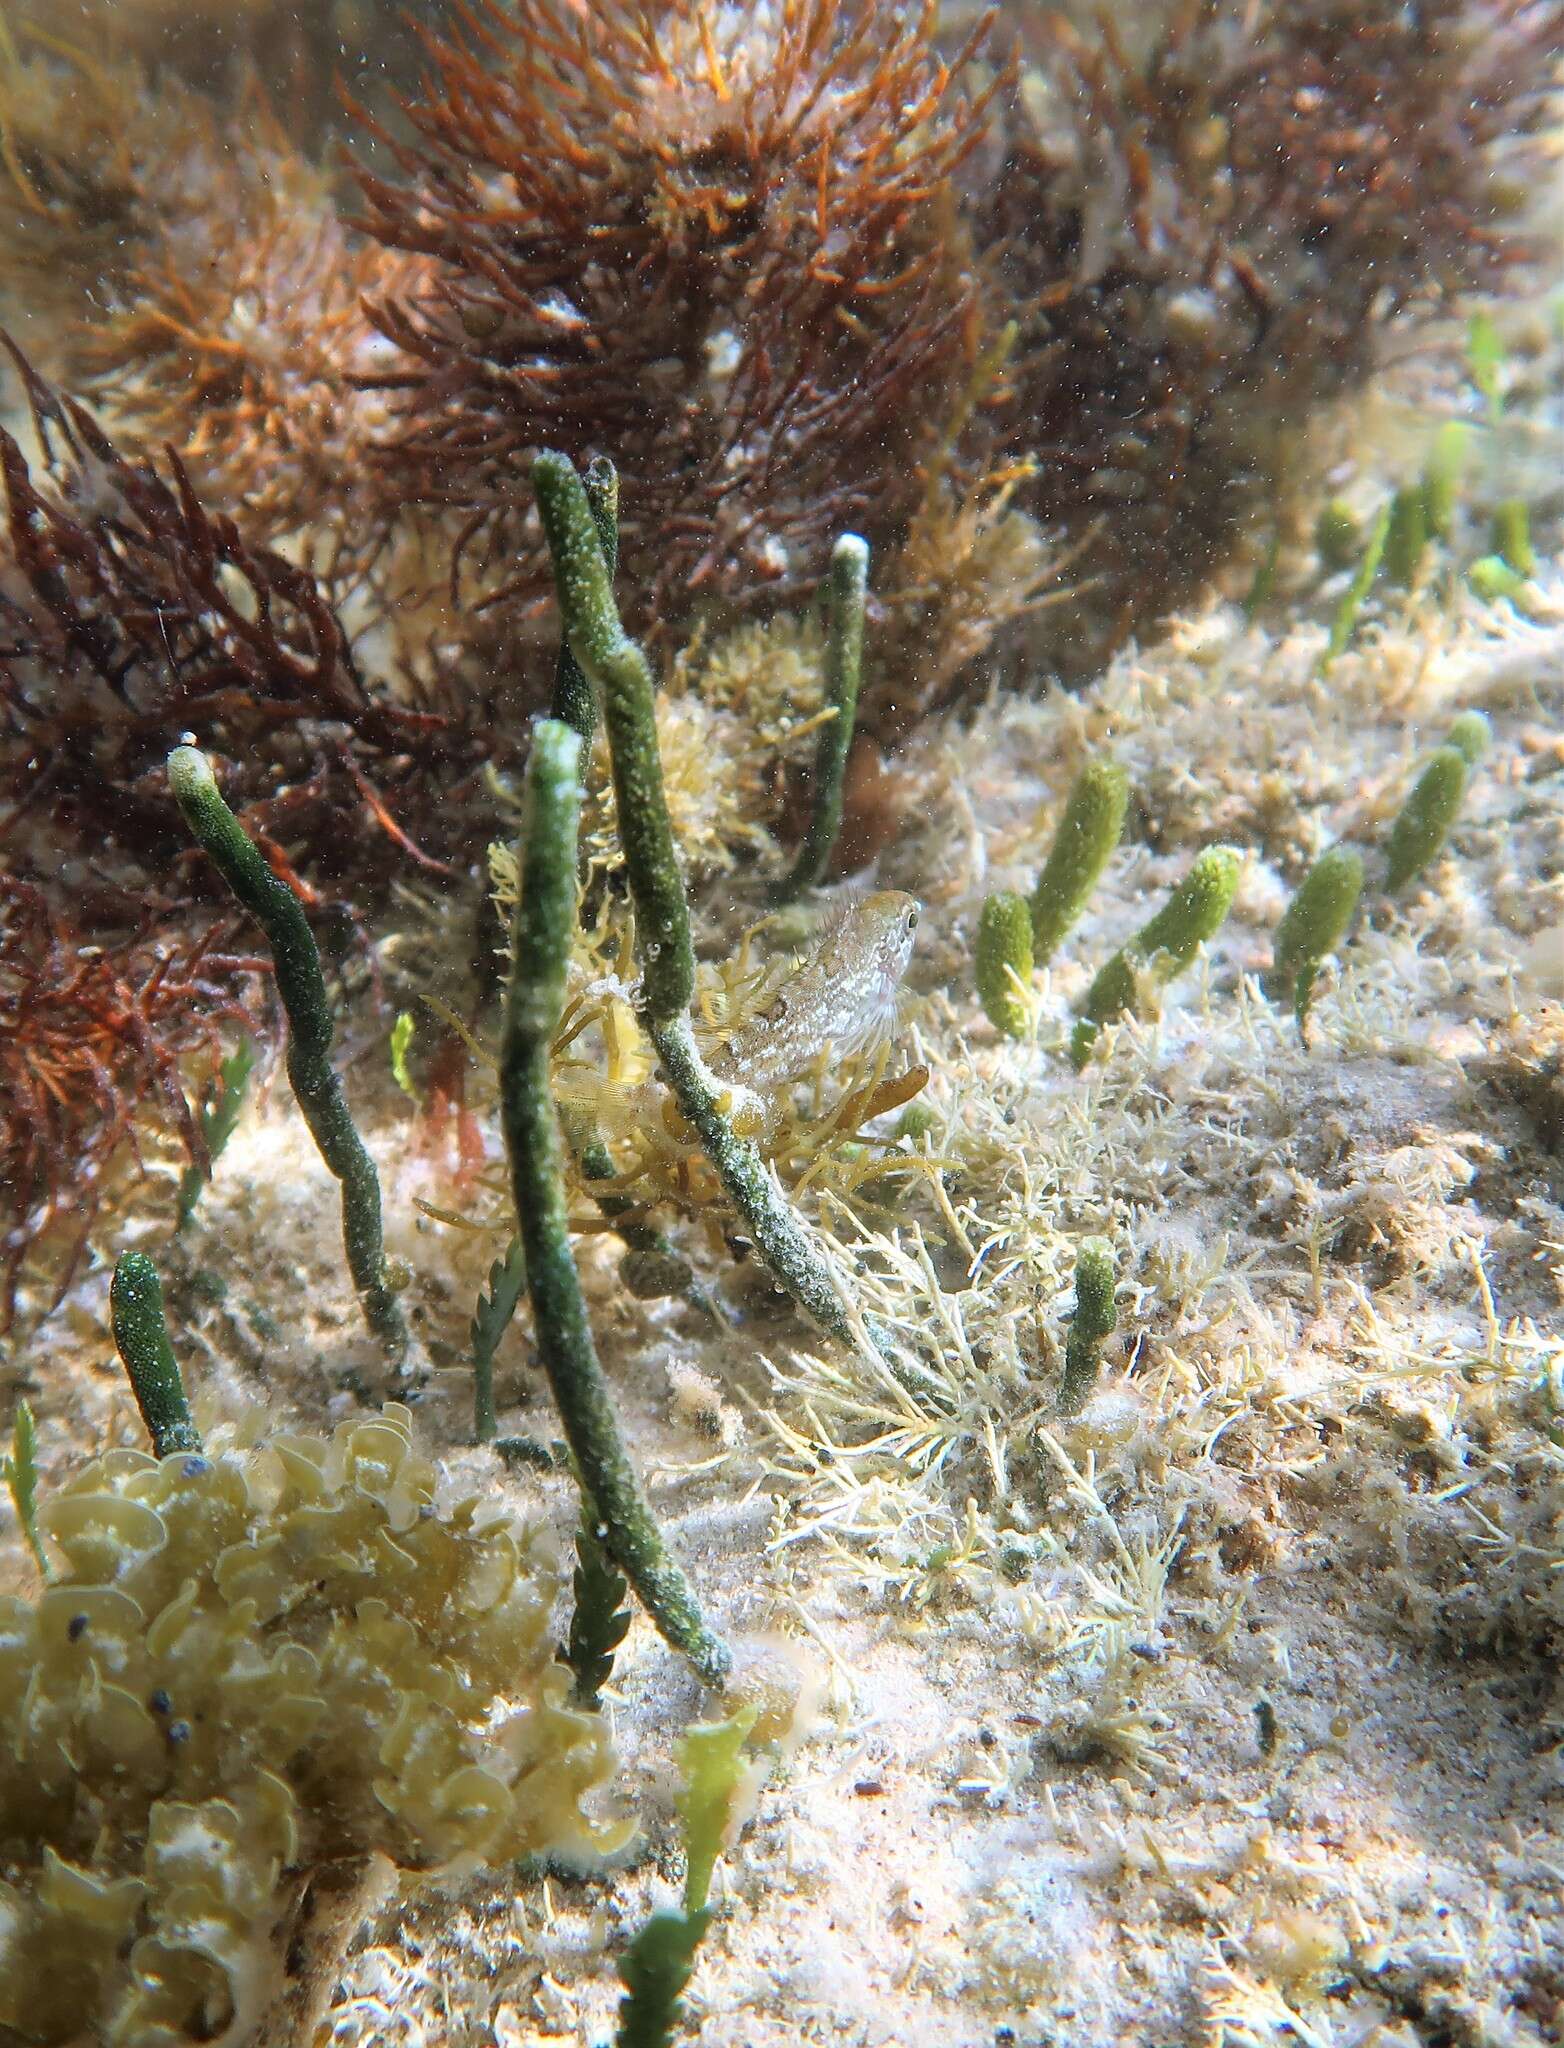 Image of Kelp fish